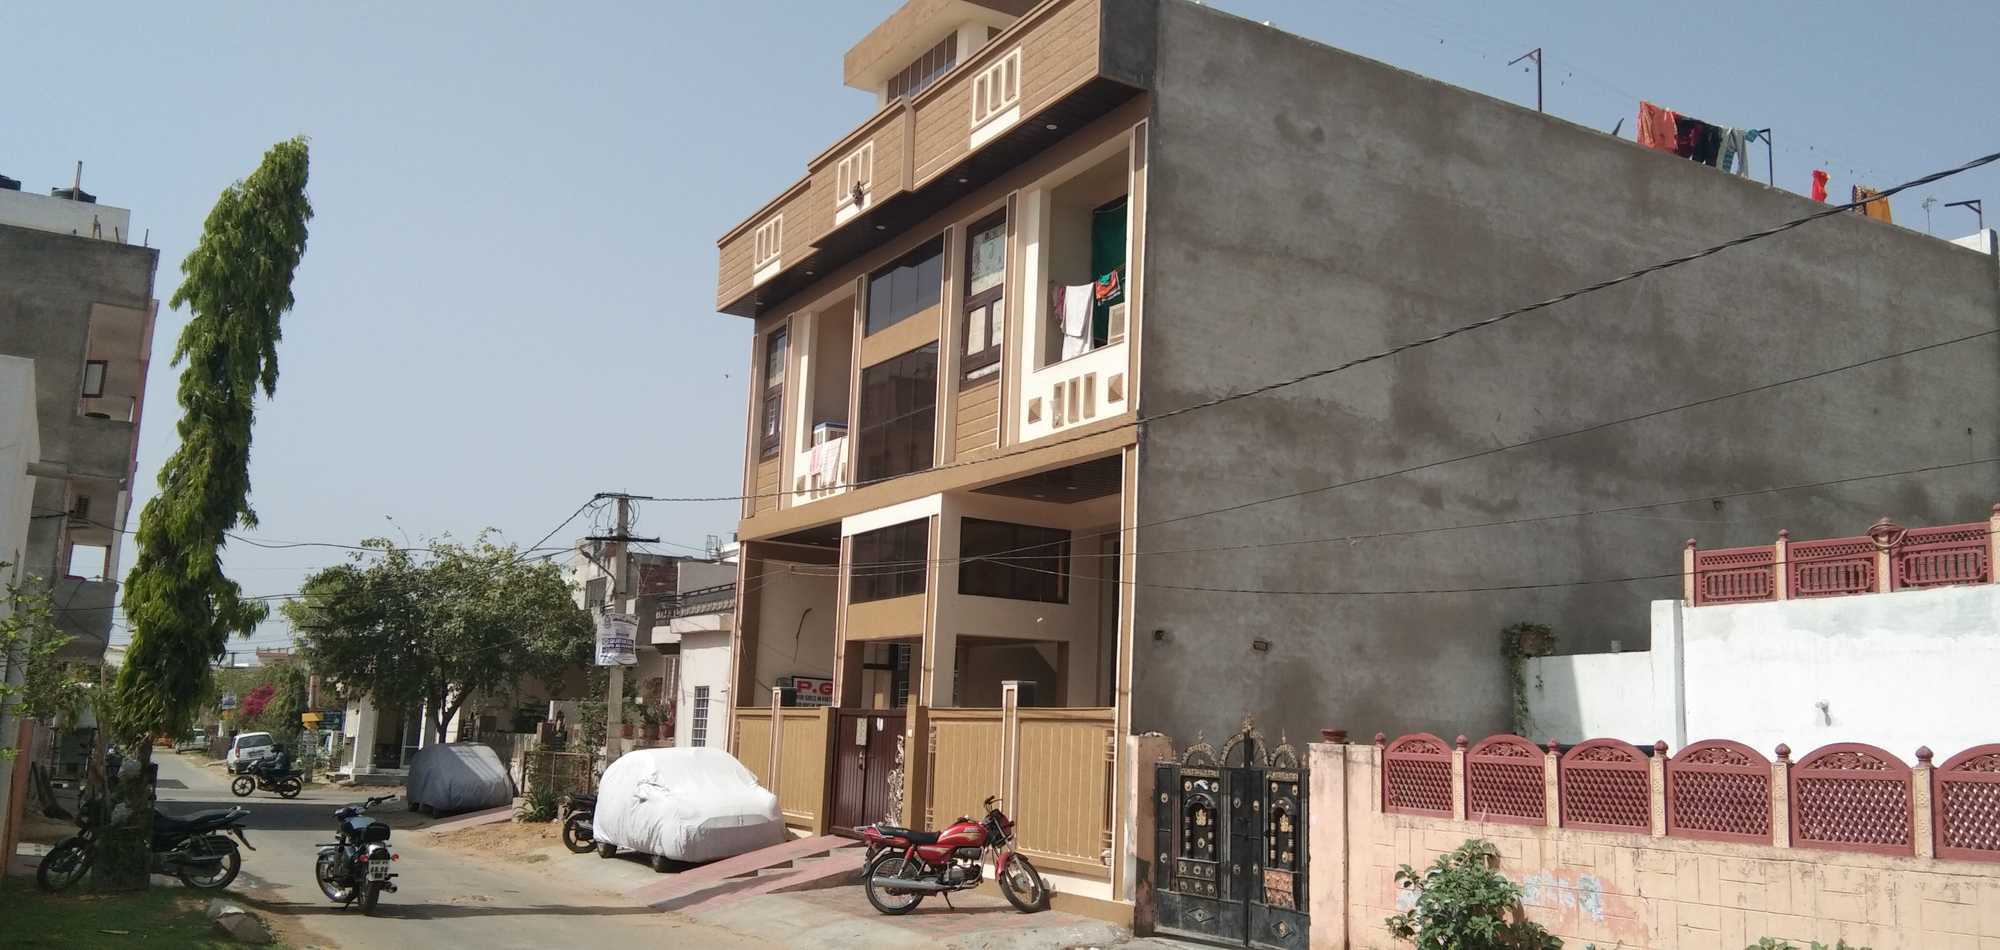 562_9849shekhawat-pg-hostel-for-girls-khatipura-jaipur-paying-guest-accommodations-2p9q924sx8.jpg